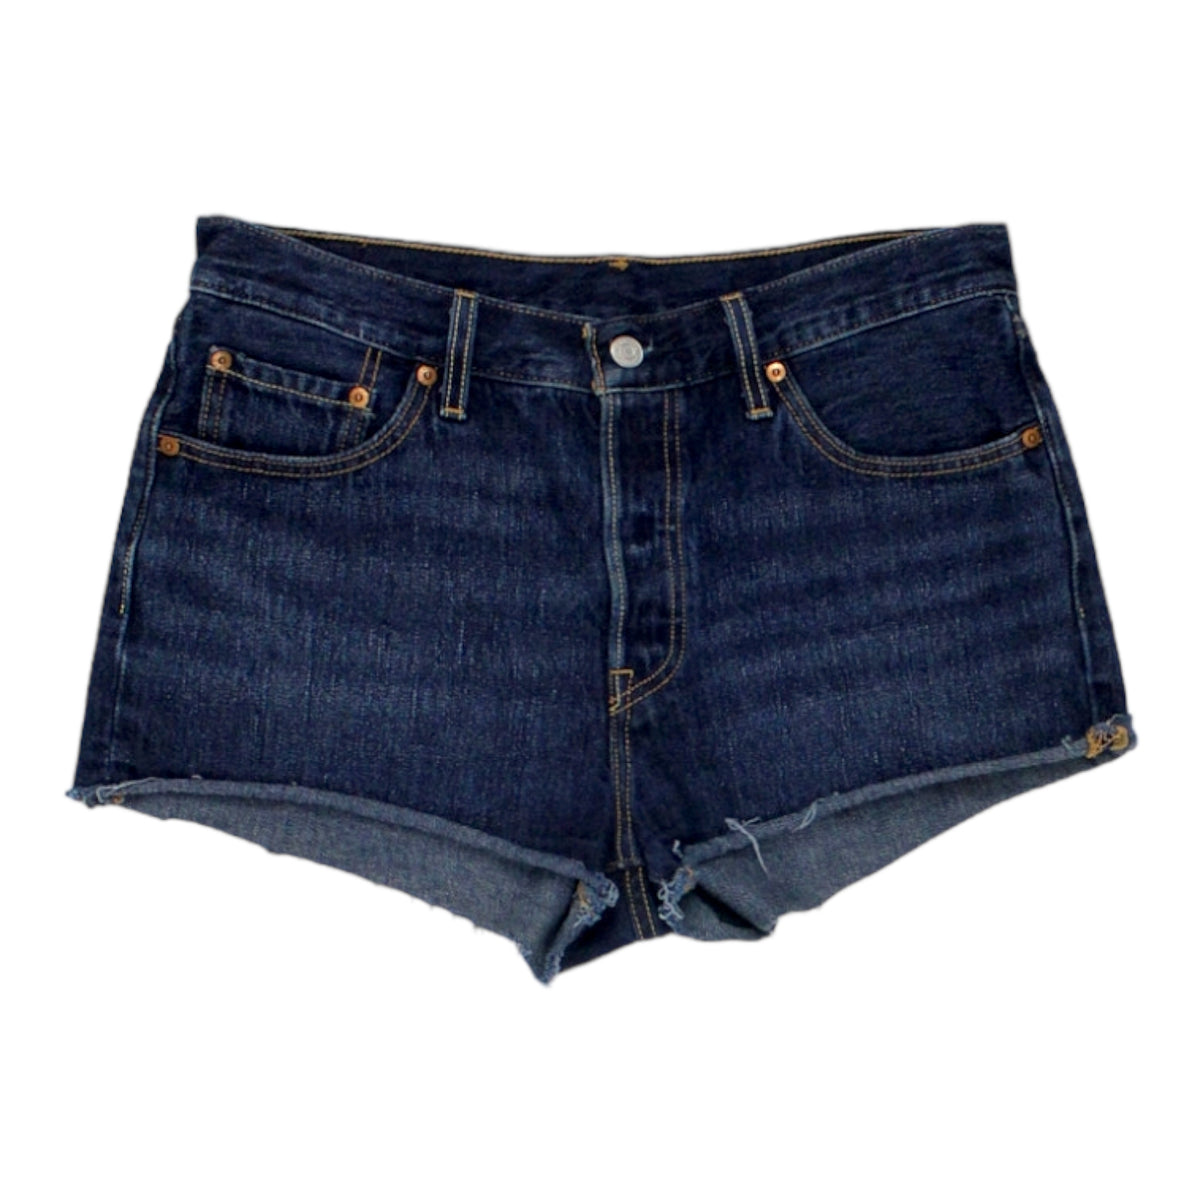 Levi's 501 Blue Denim Cut-Off Shorts